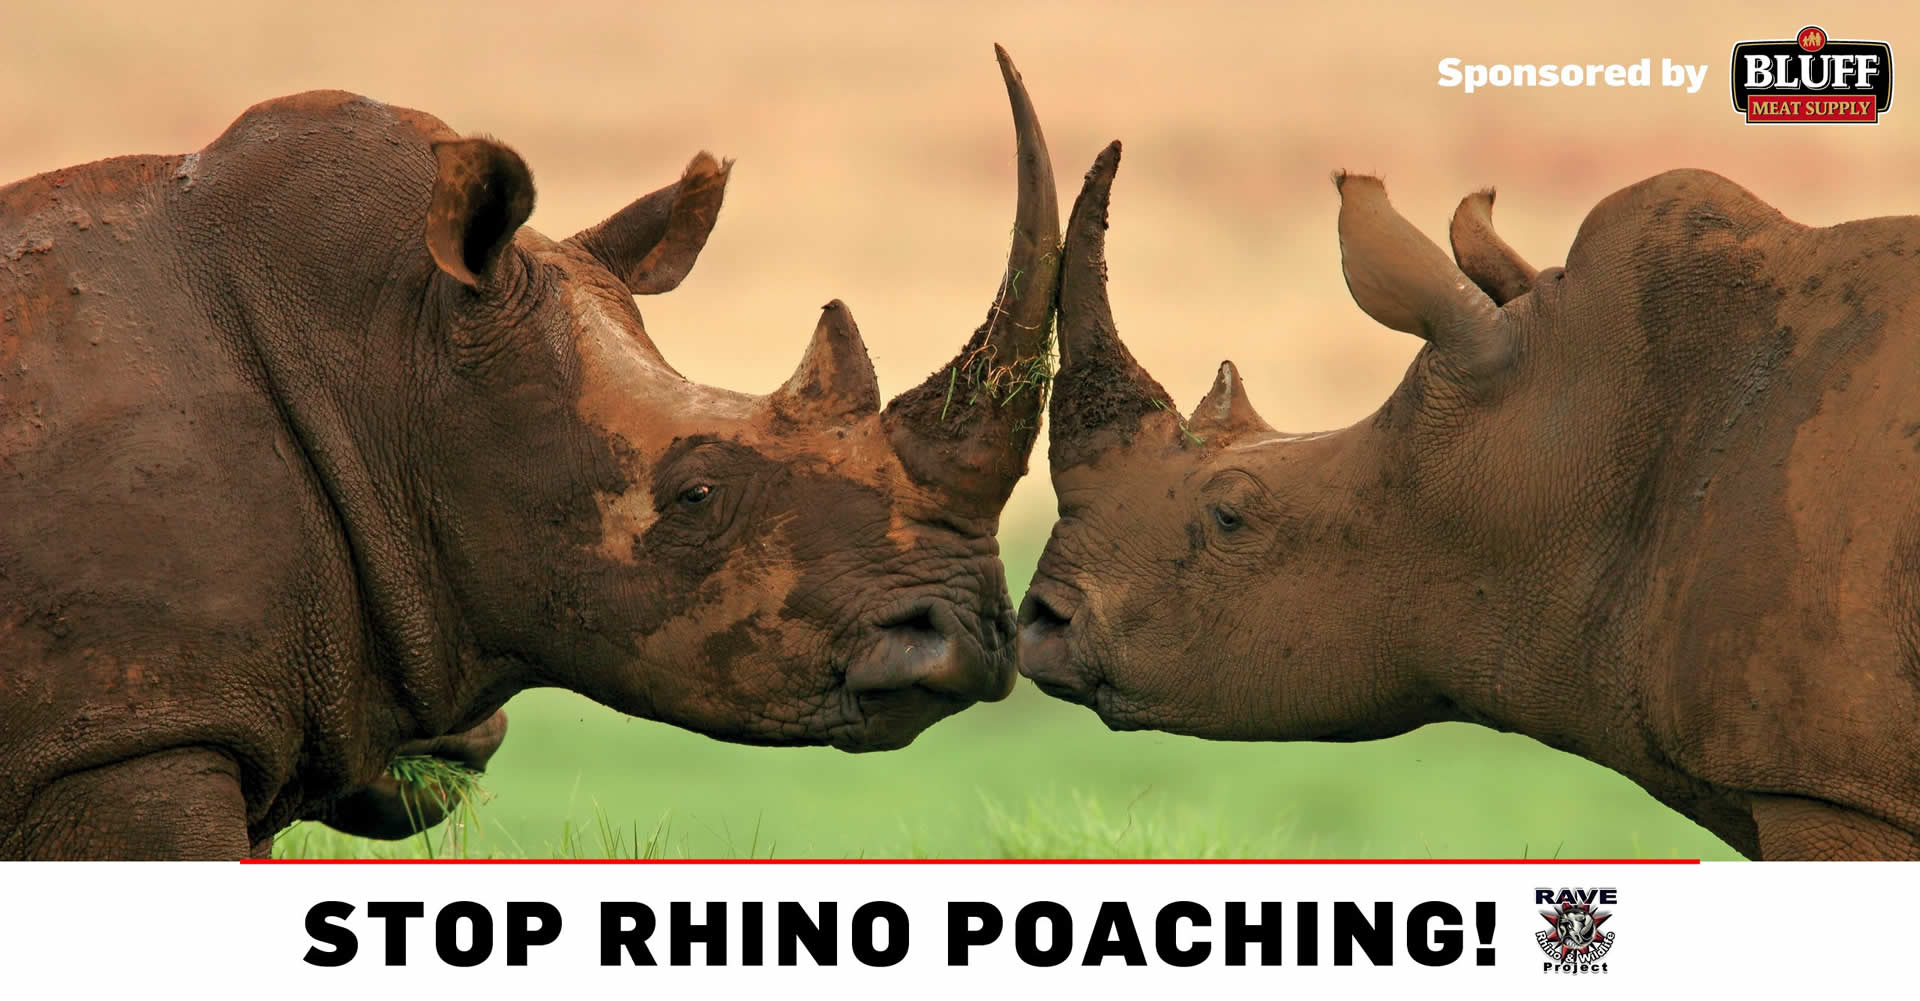 Rave Rhino and Wildlife Project NPC